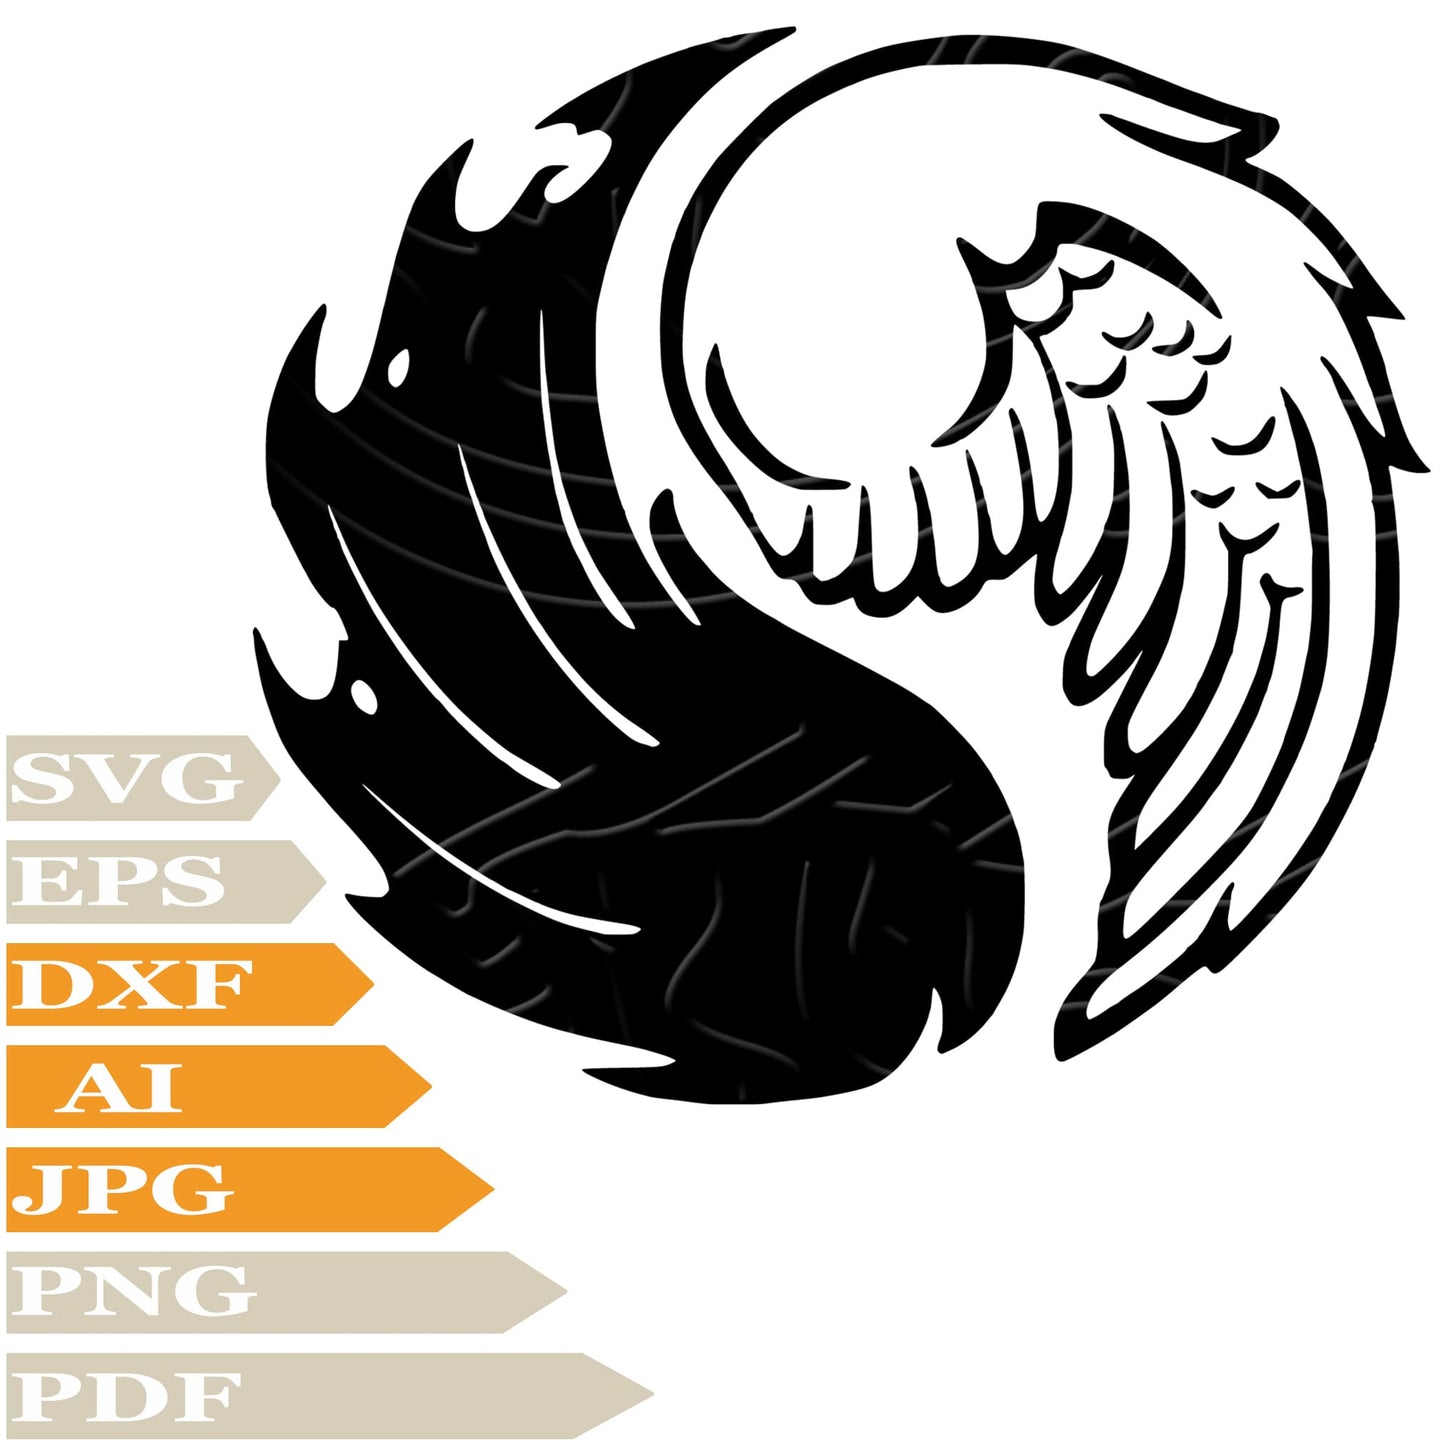 Angel Devil SVG, PNG, Clip art, Cut File, Vector Graphics, Instant Download, Wall sticker, Digital, For Cricut, Silhouette